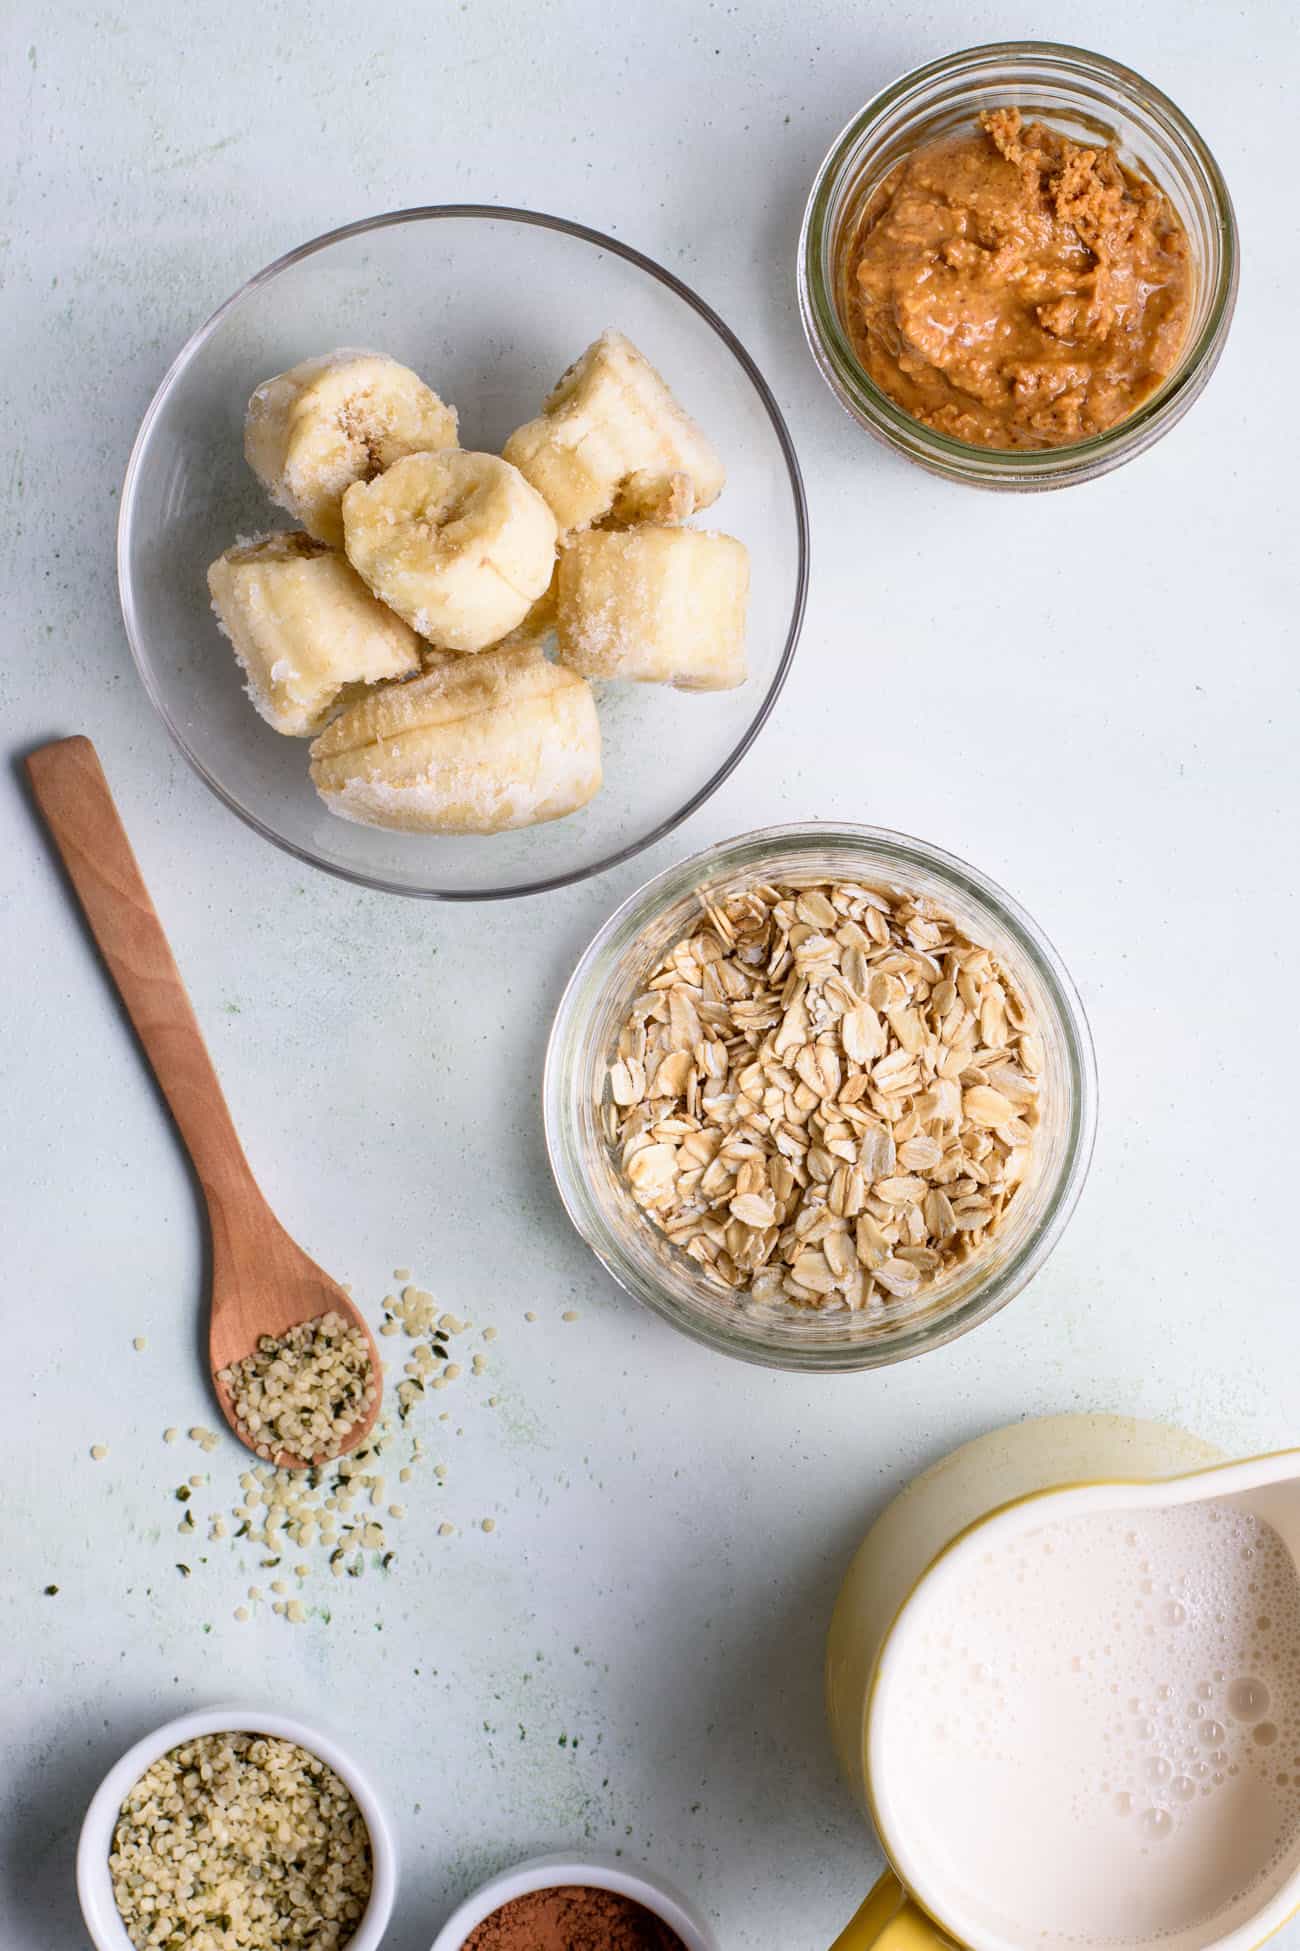 Ingredients to make a smoothie: frozen banana, oats, peanut butter, hemp seeds, almond milk, cocoa powder